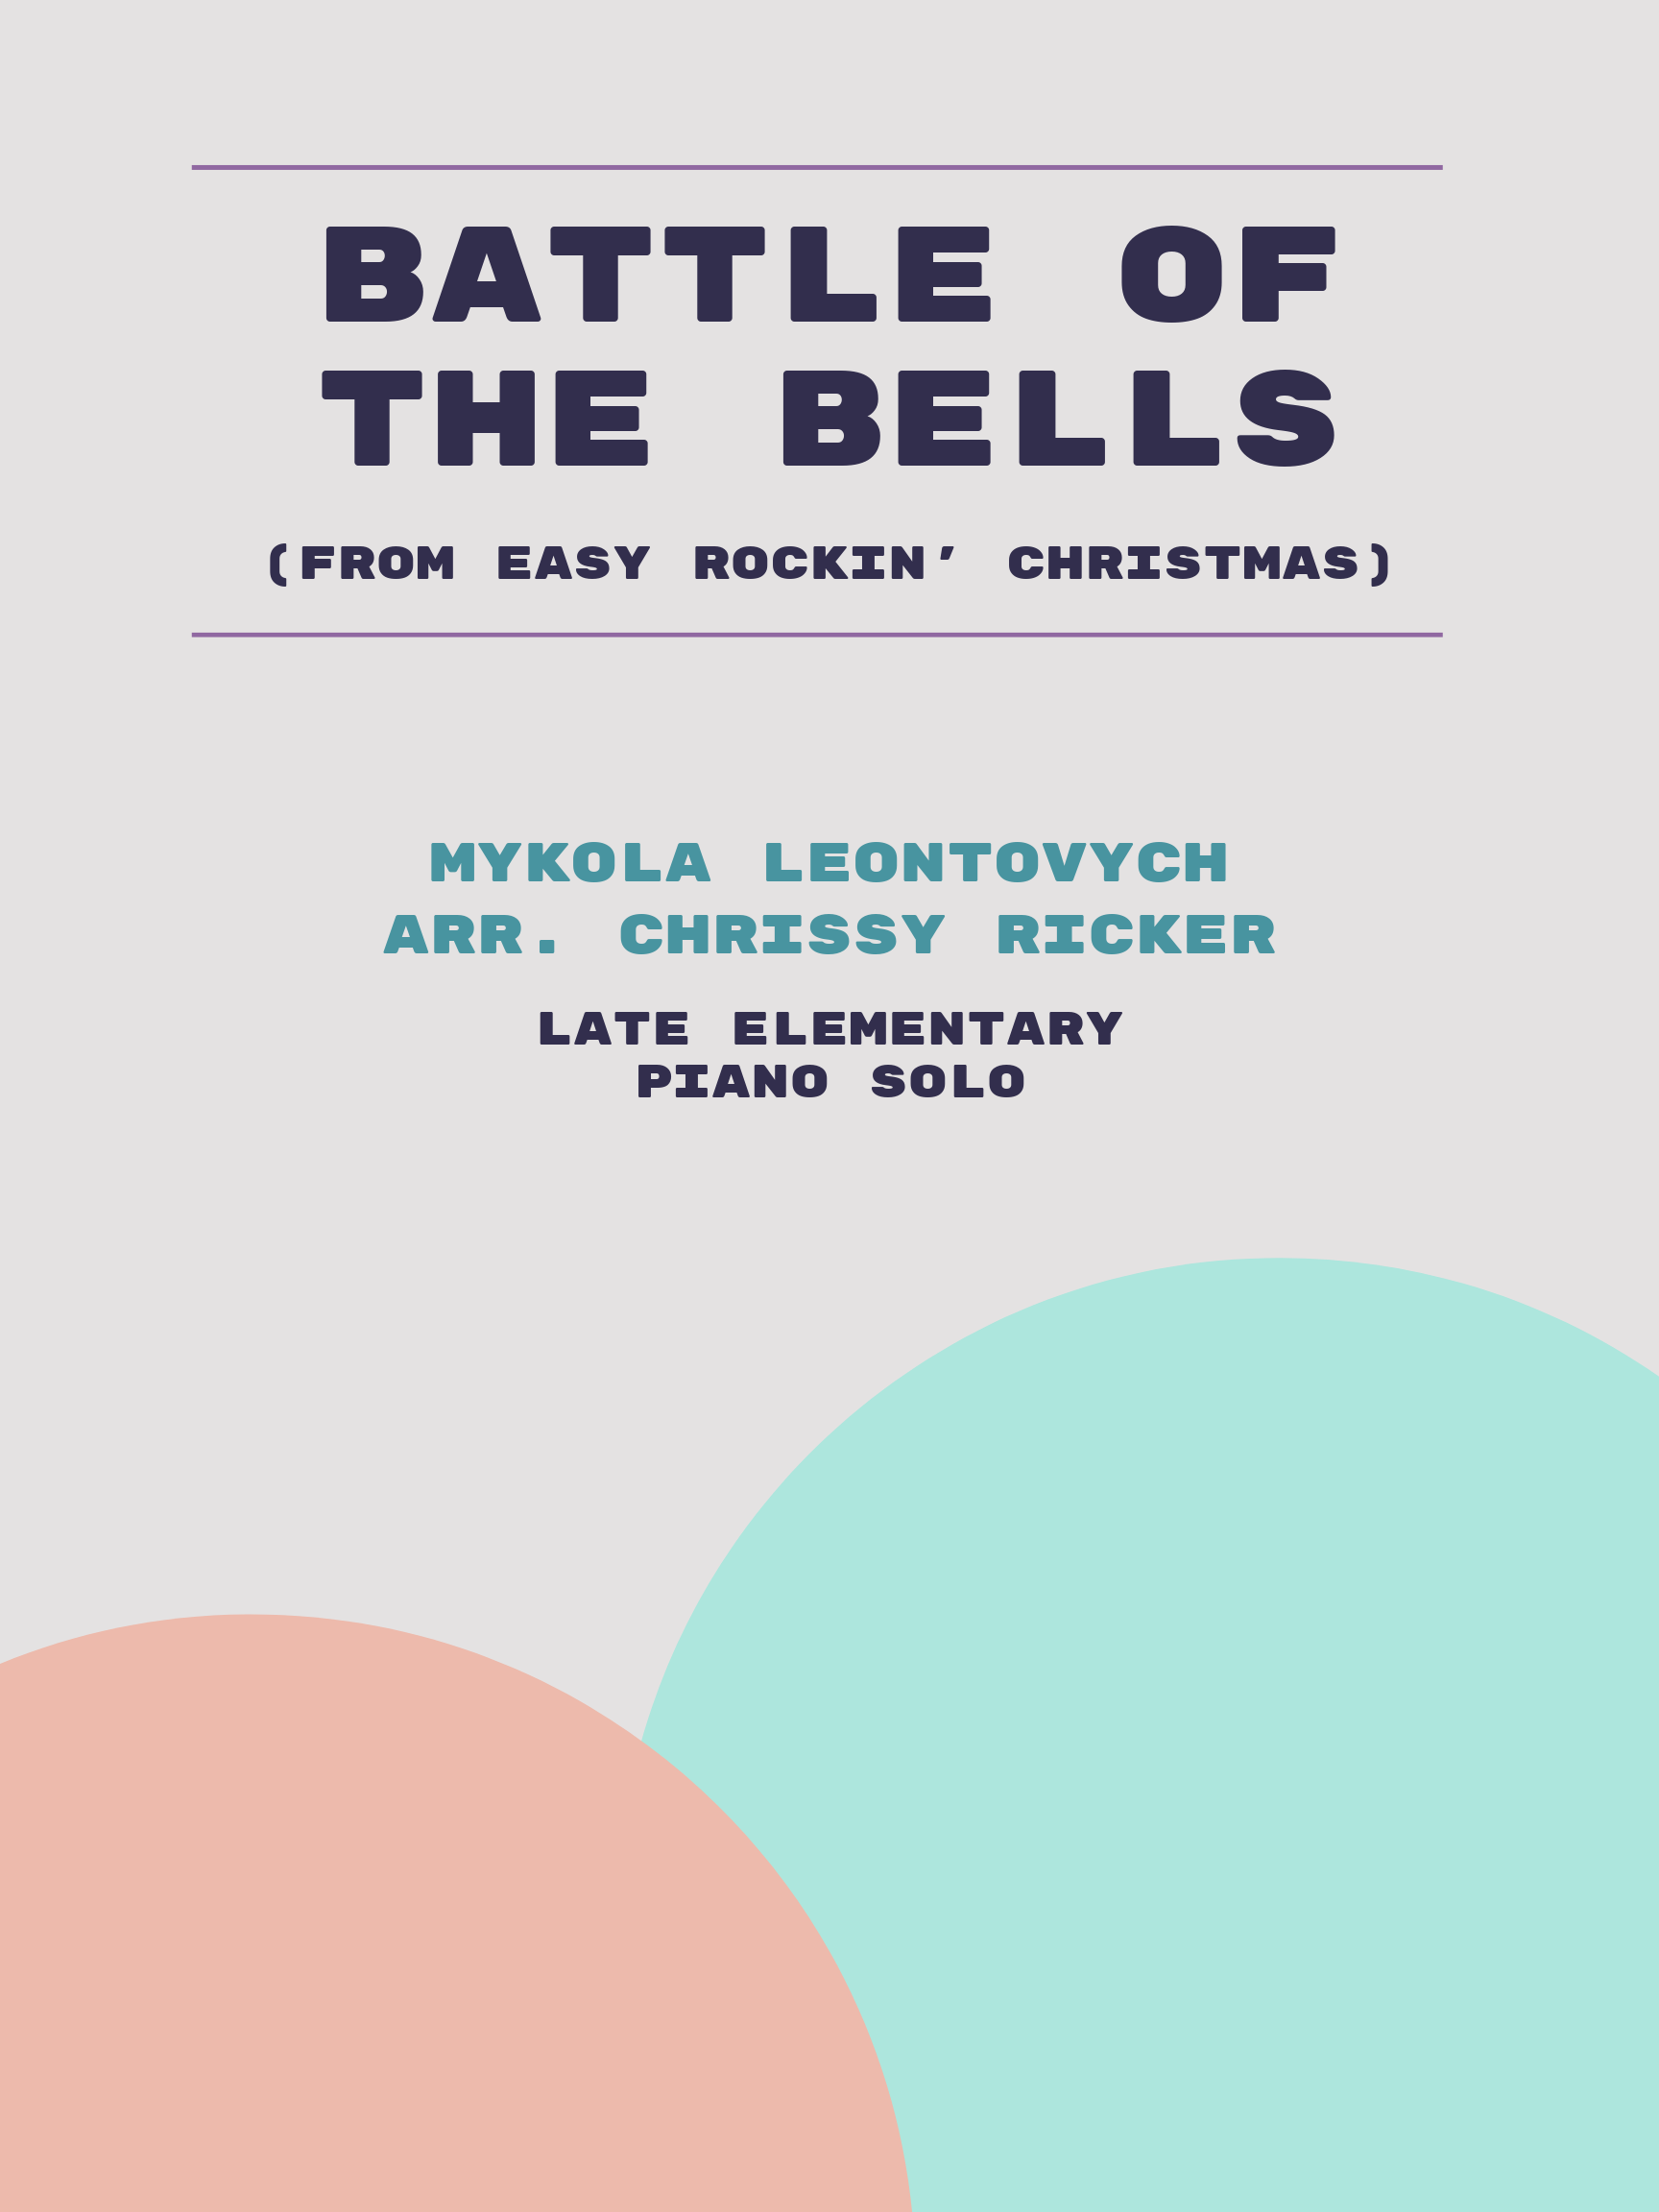 Battle of the Bells by Mykola Leontovych